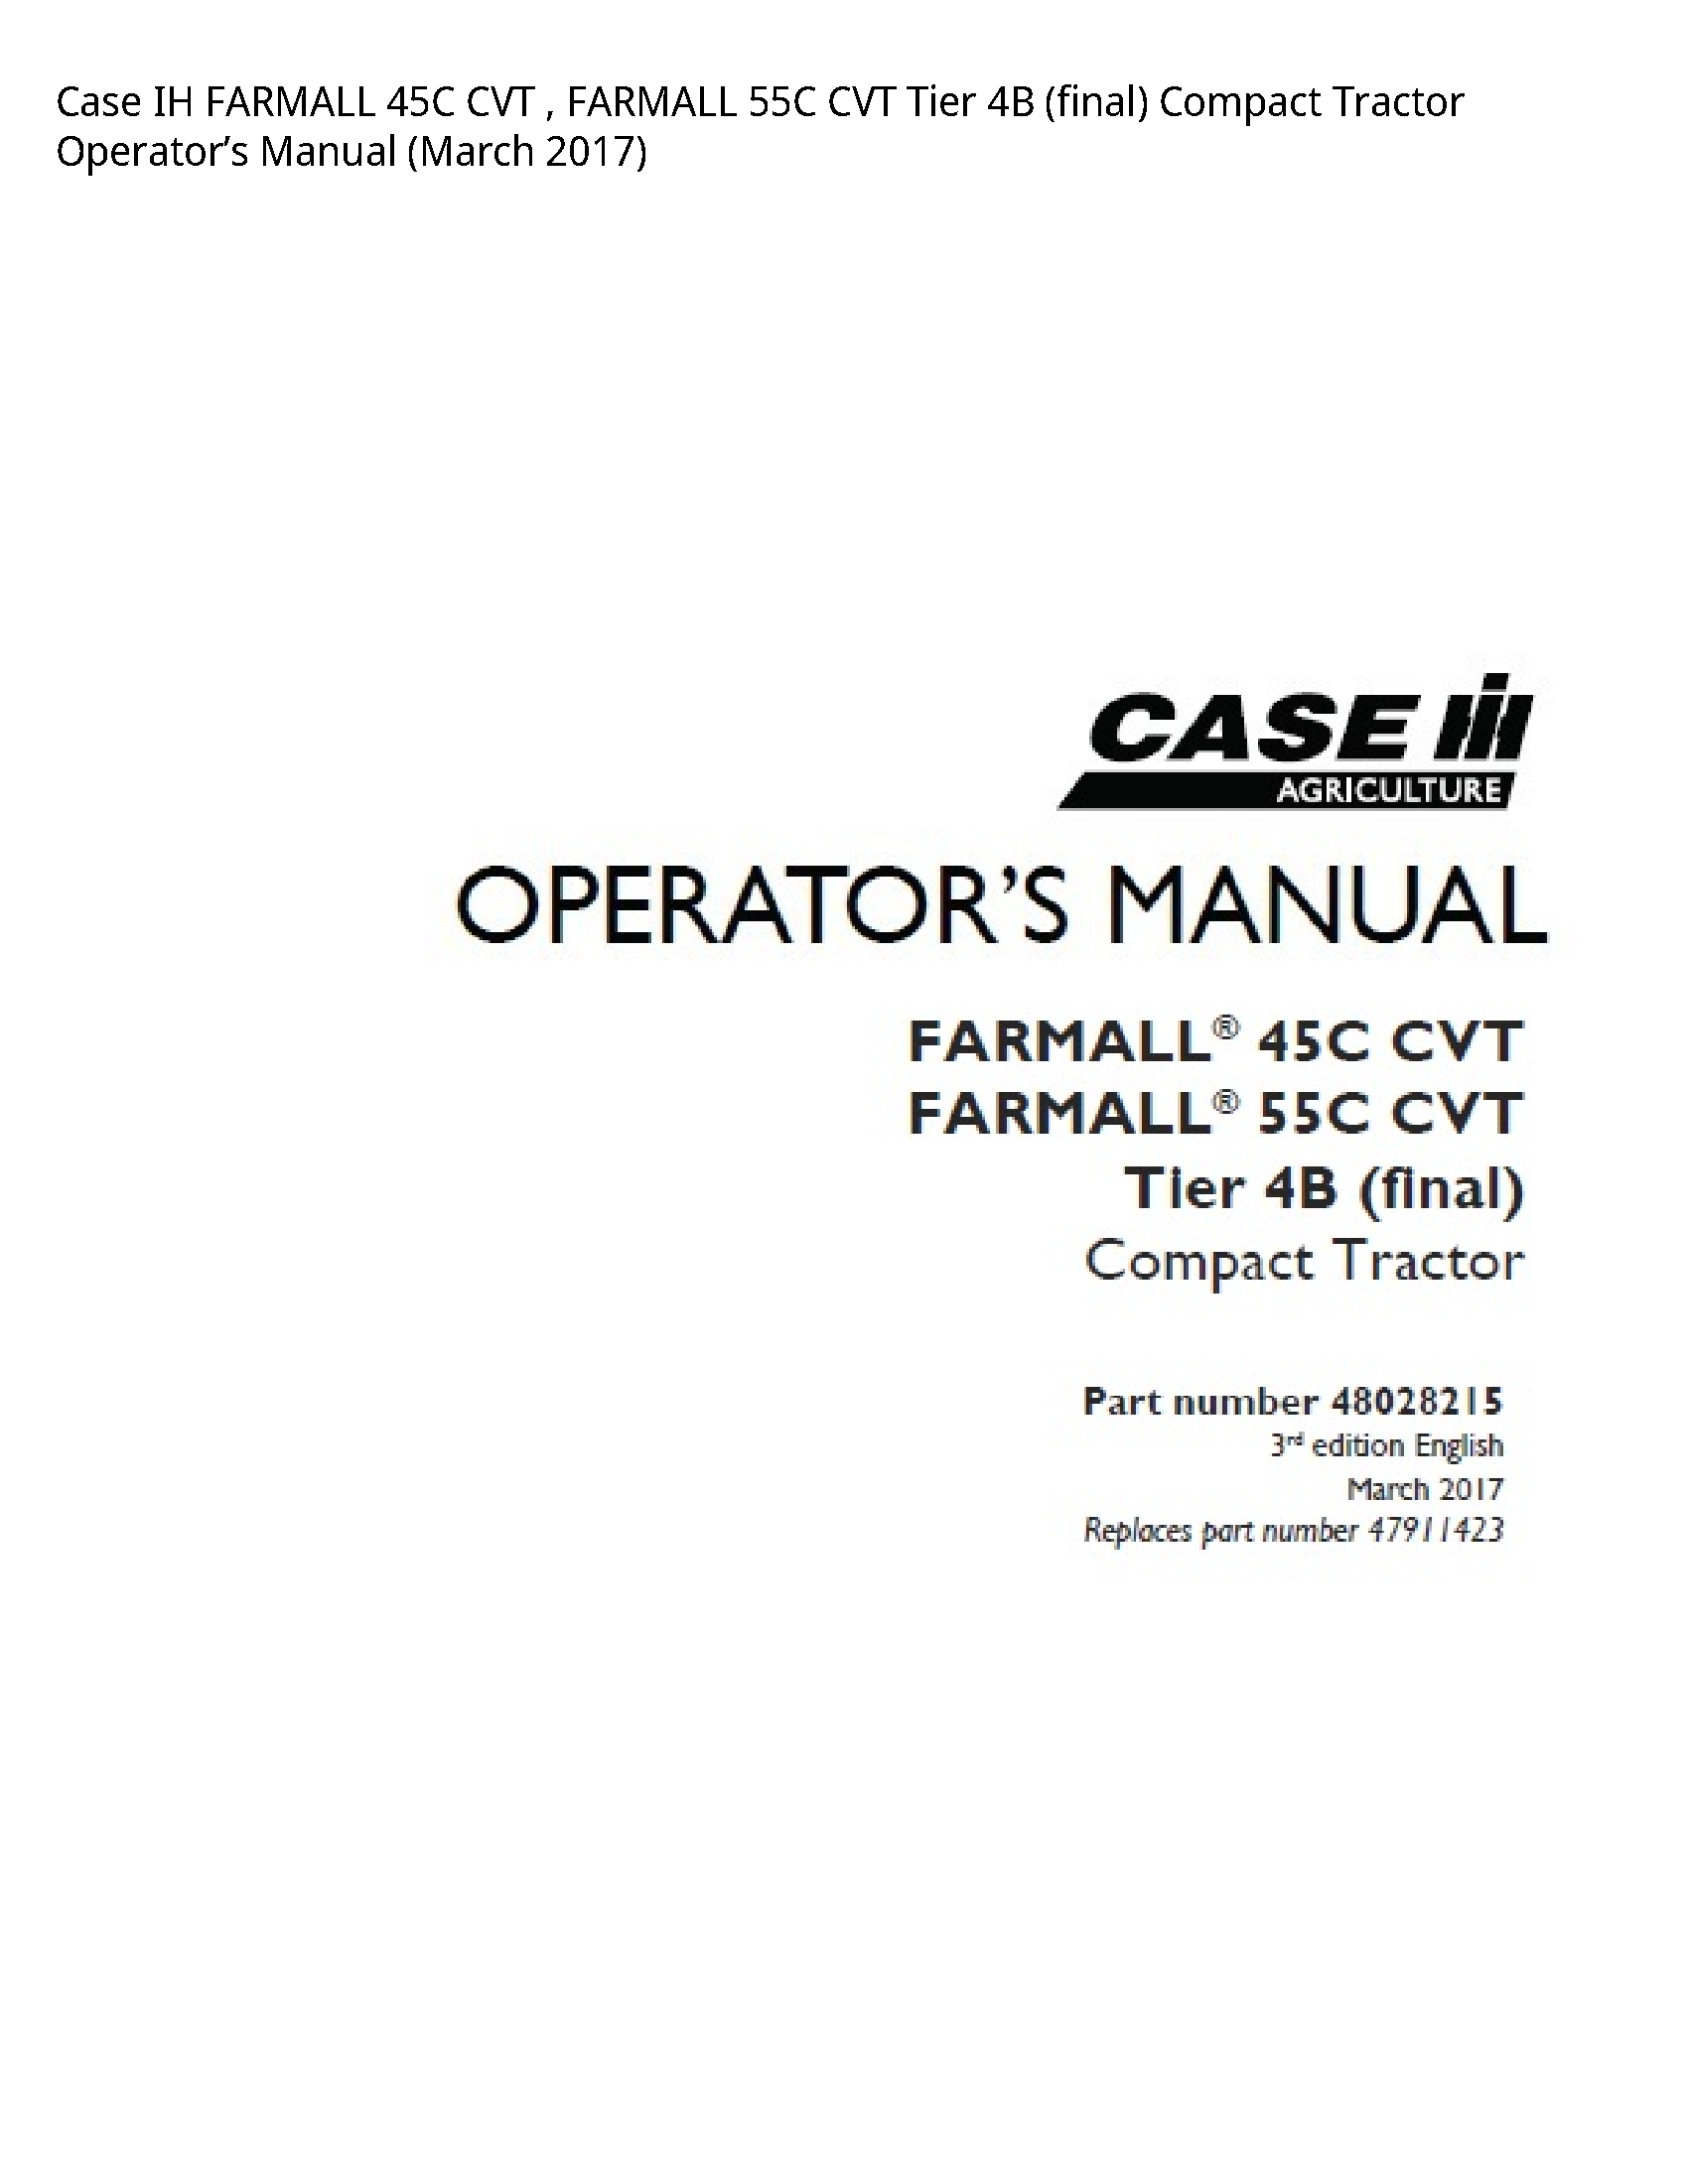 Case/Case IH 45C IH FARMALL CVT FARMALL CVT Tier (final) Compact Tractor Operator’s manual